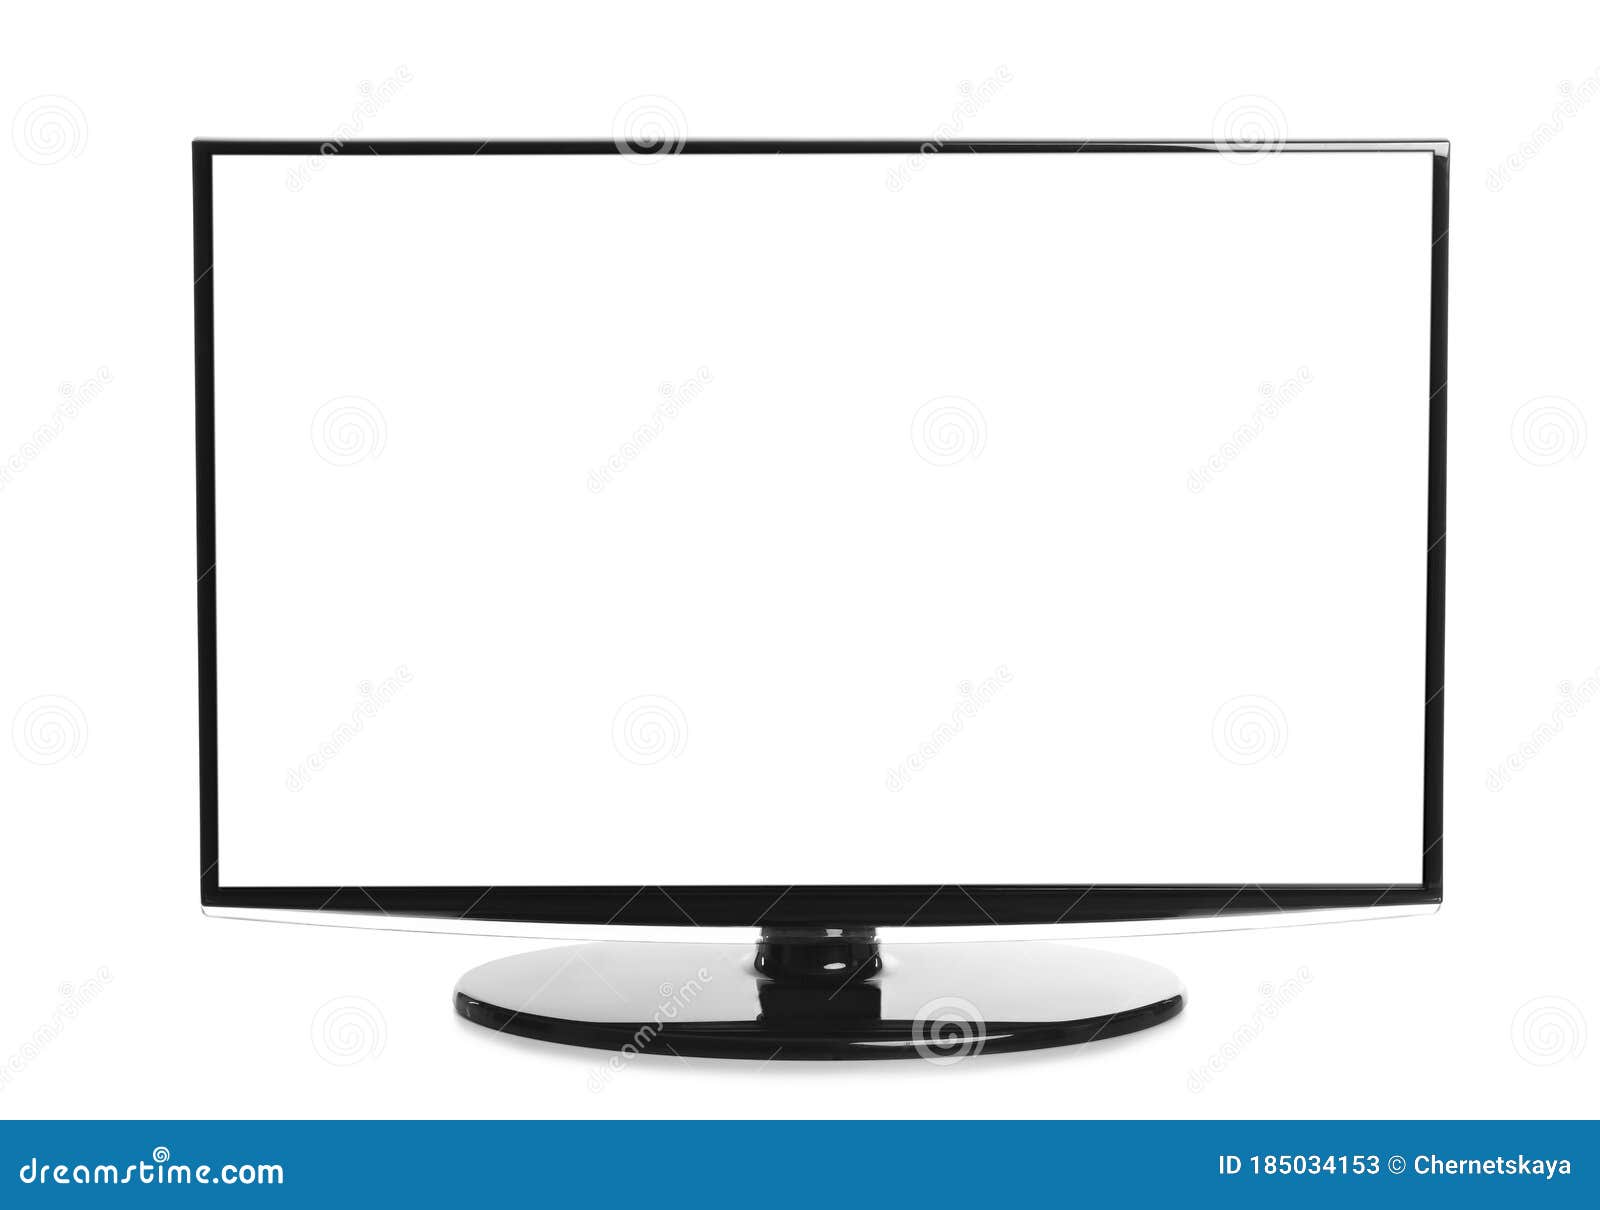 Modern Plasma TV on Background. Space for Design Stock Image - Image of ...